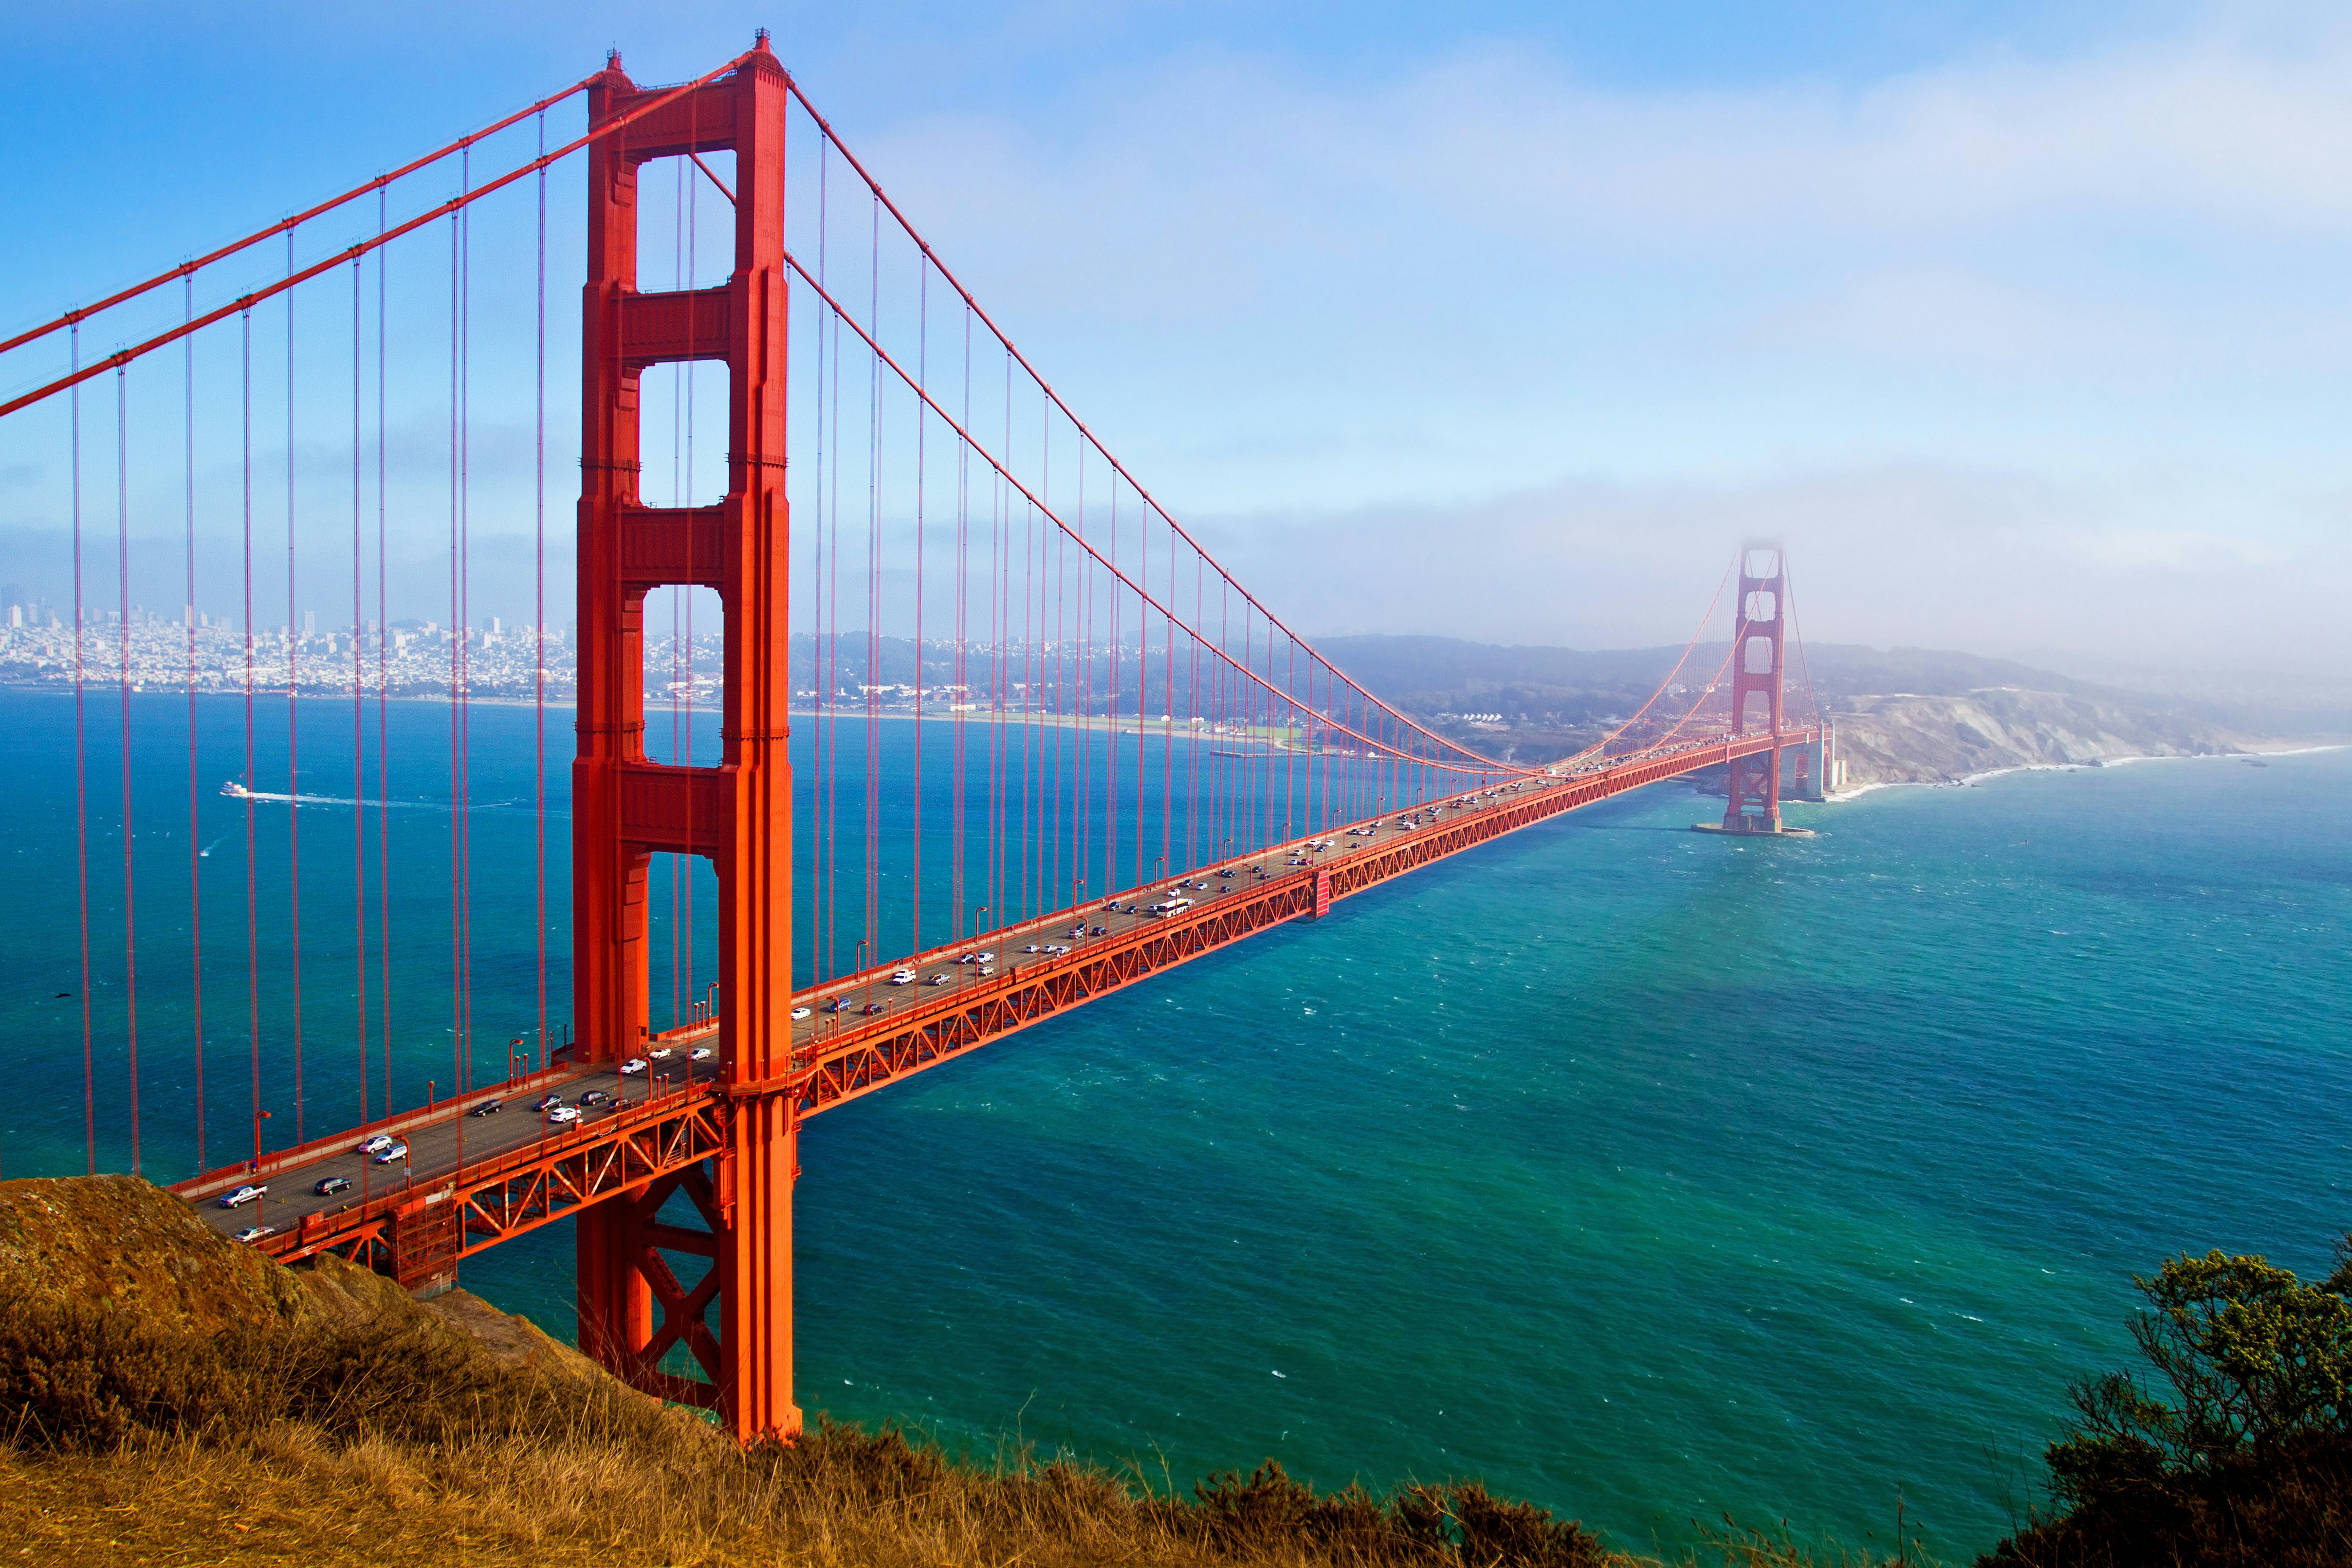 Things to do near Golden Gate Bridge